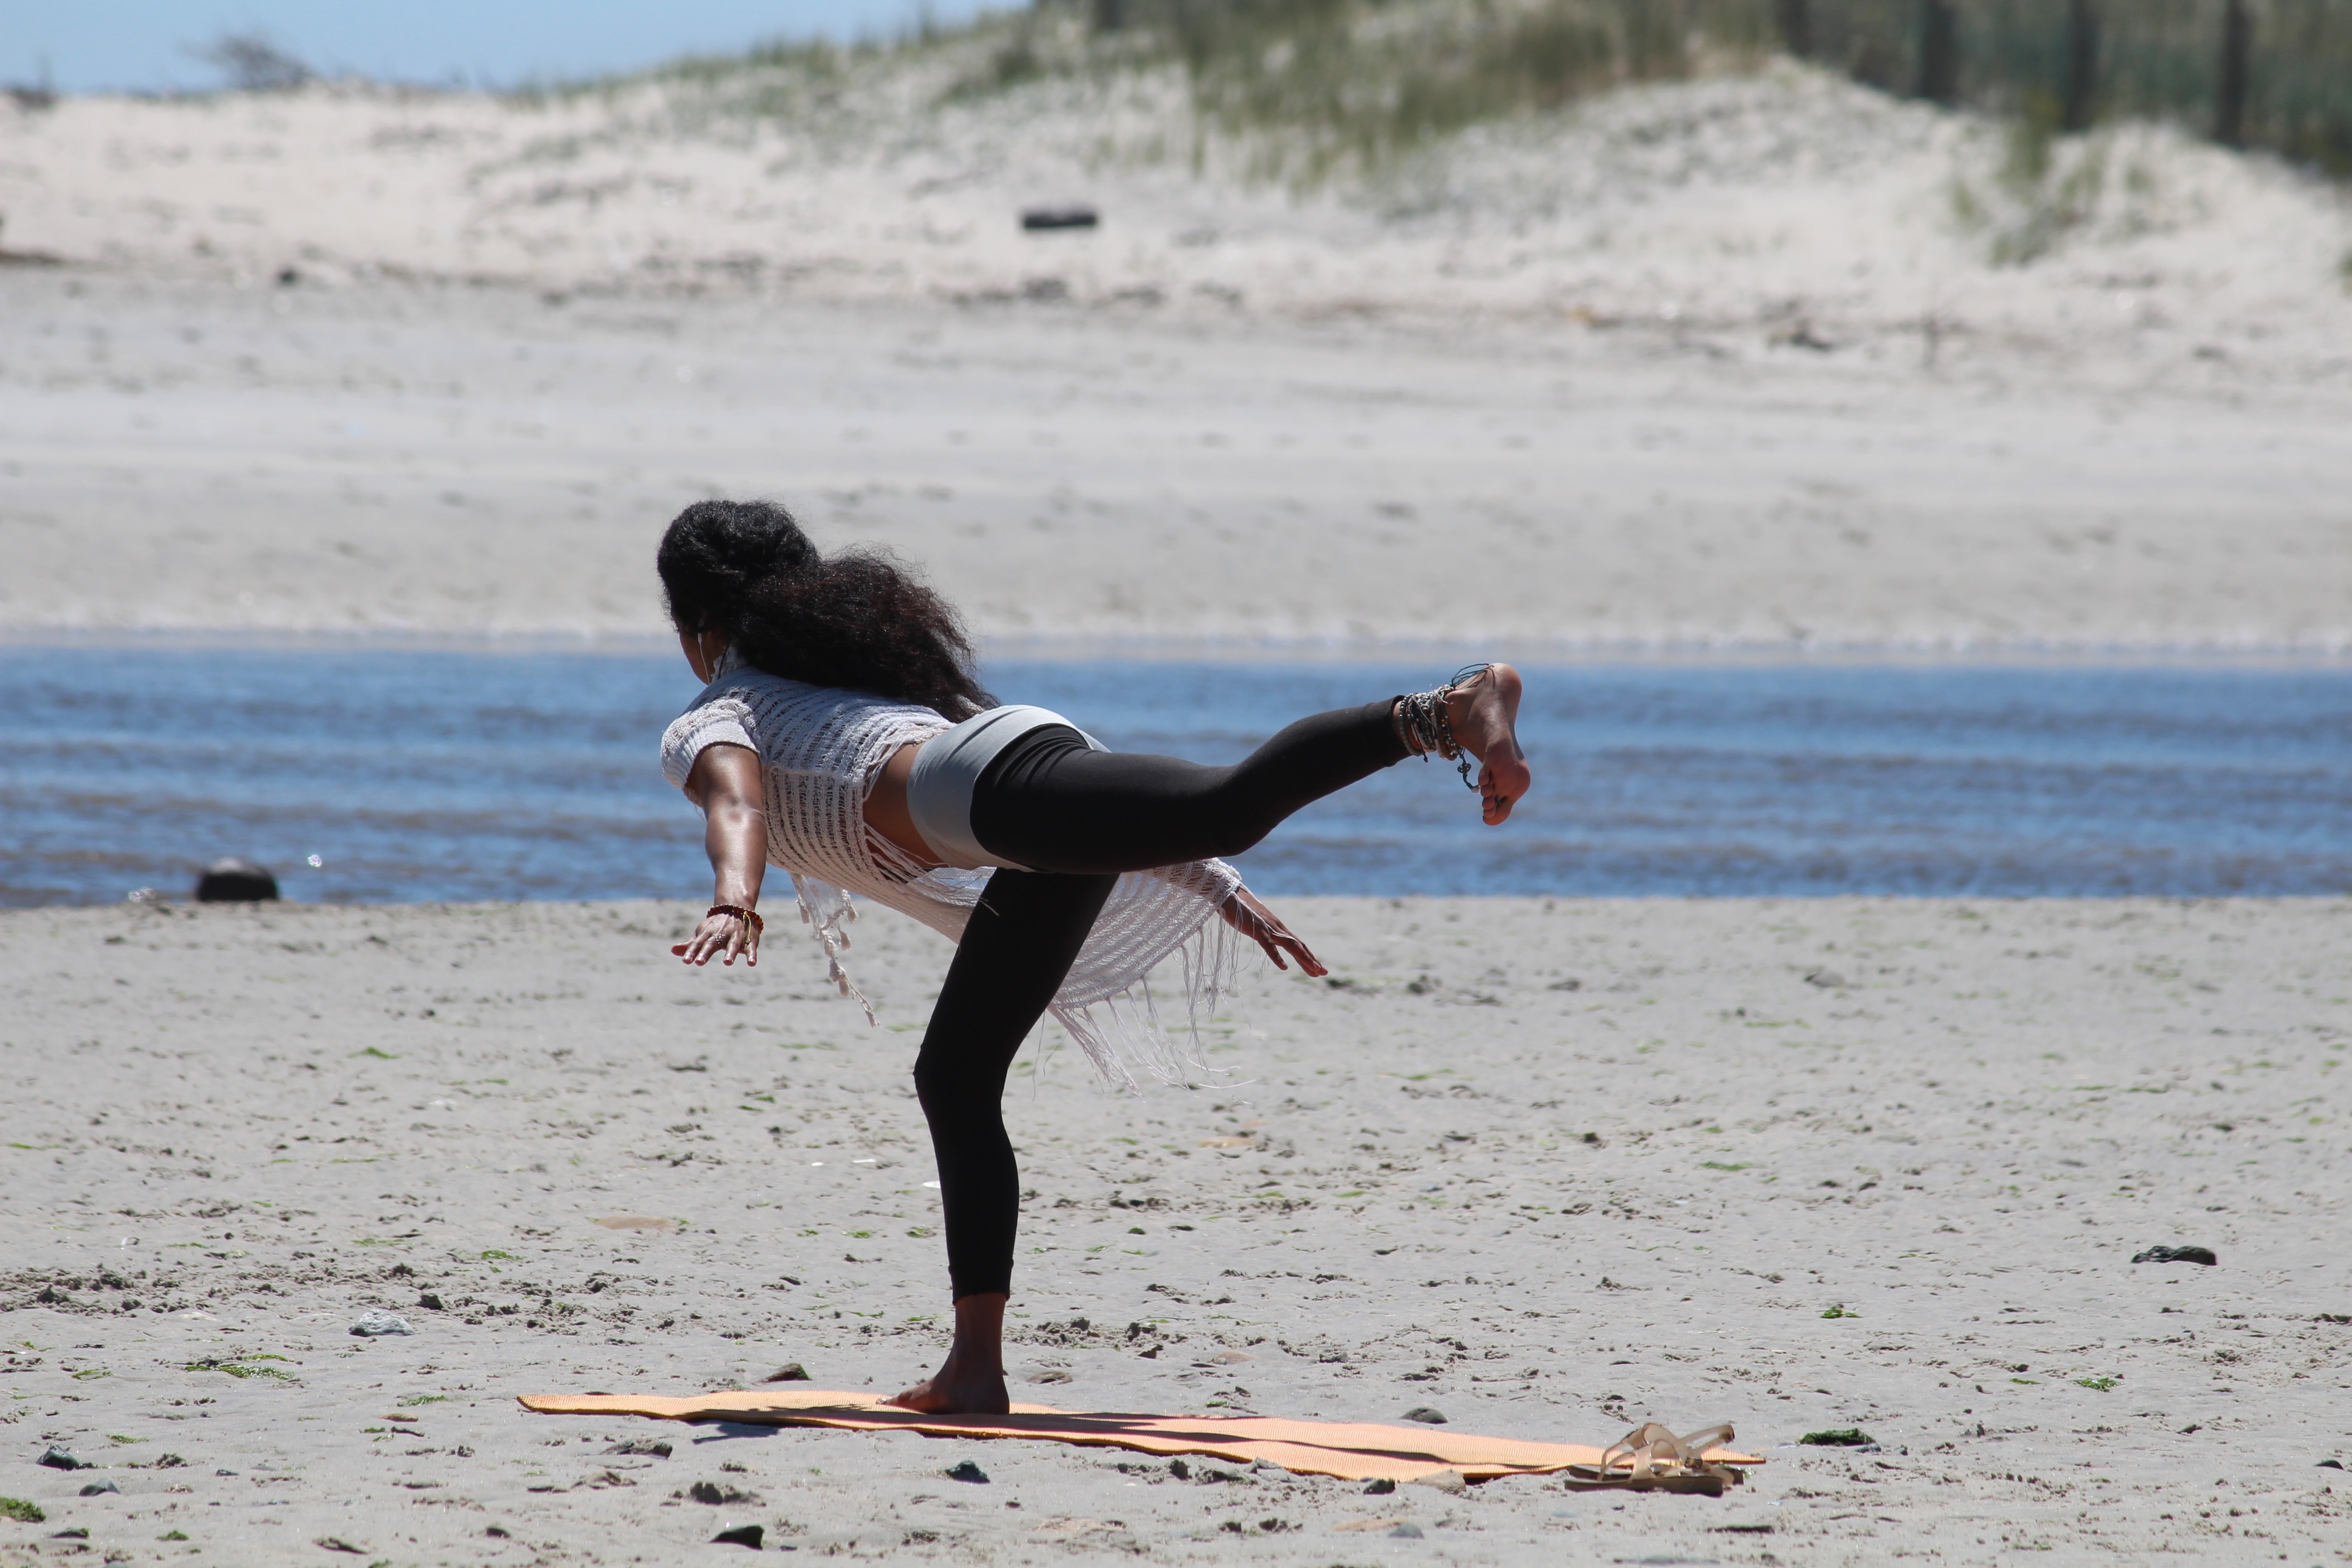 Йога на берегу. Йога на пляже. Йога на пляже девушка. Фотосессия на пляже йога. Йога на берегу моря.